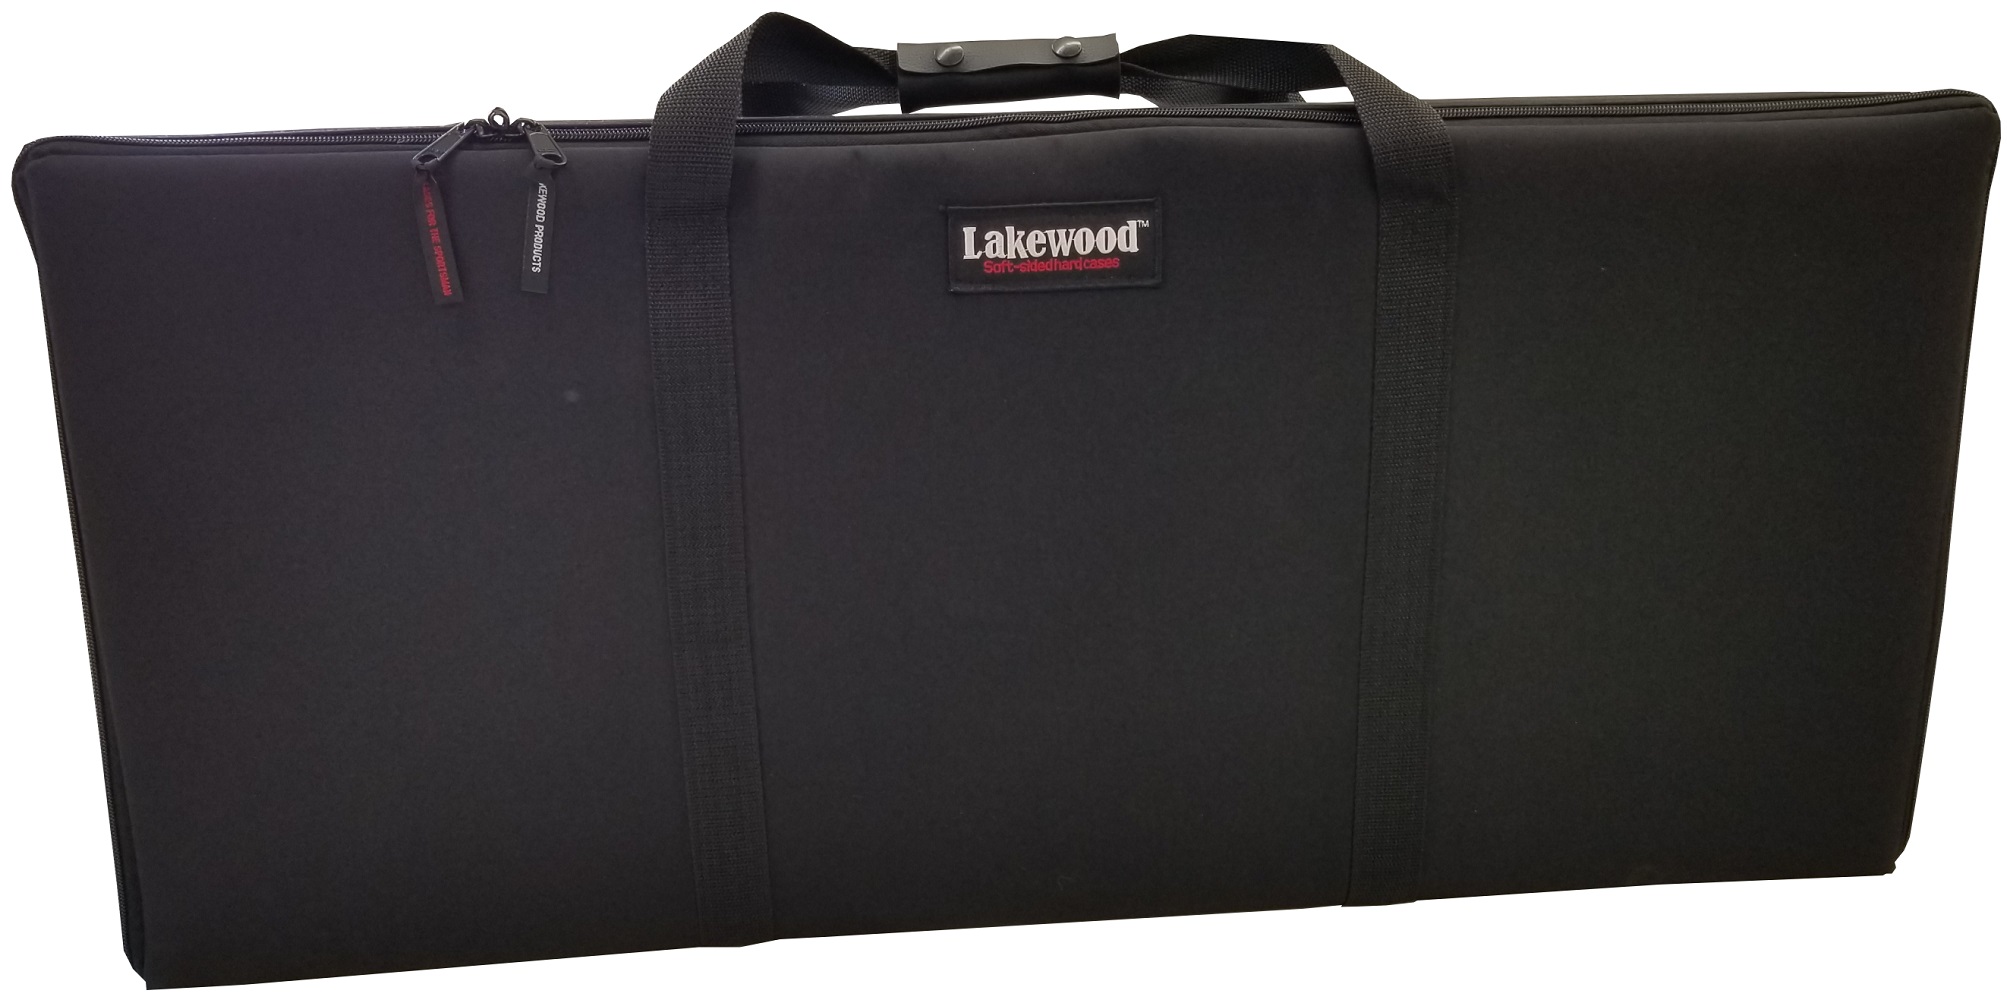 new-lakewood-soft-sided-hard-take-down-shotgun-case-3-barrel-229-99